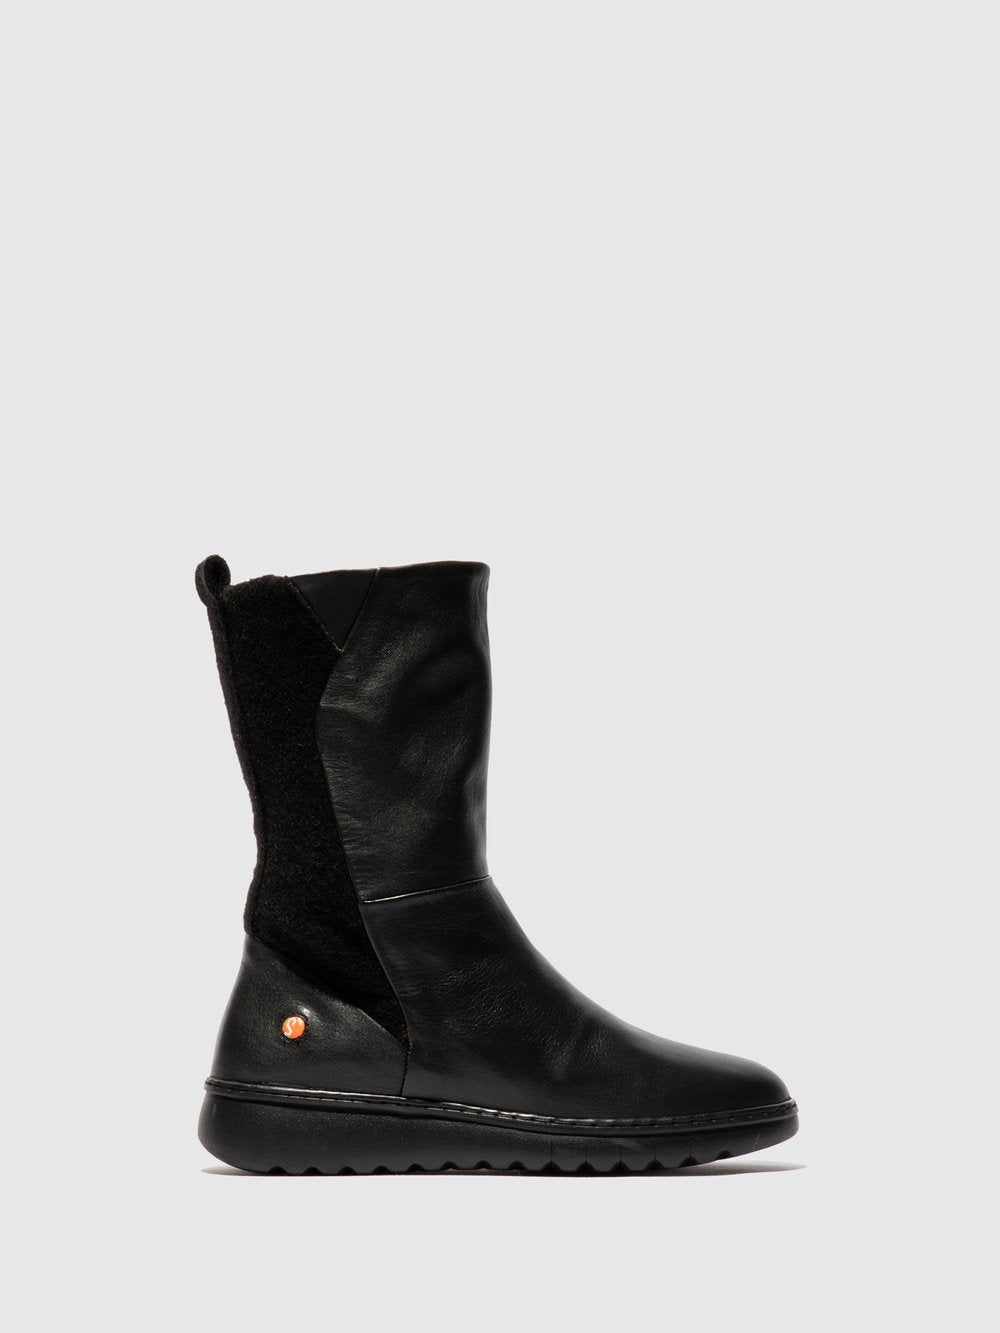 Softinos Ezra black boot - Imeldas Shoes Norwich